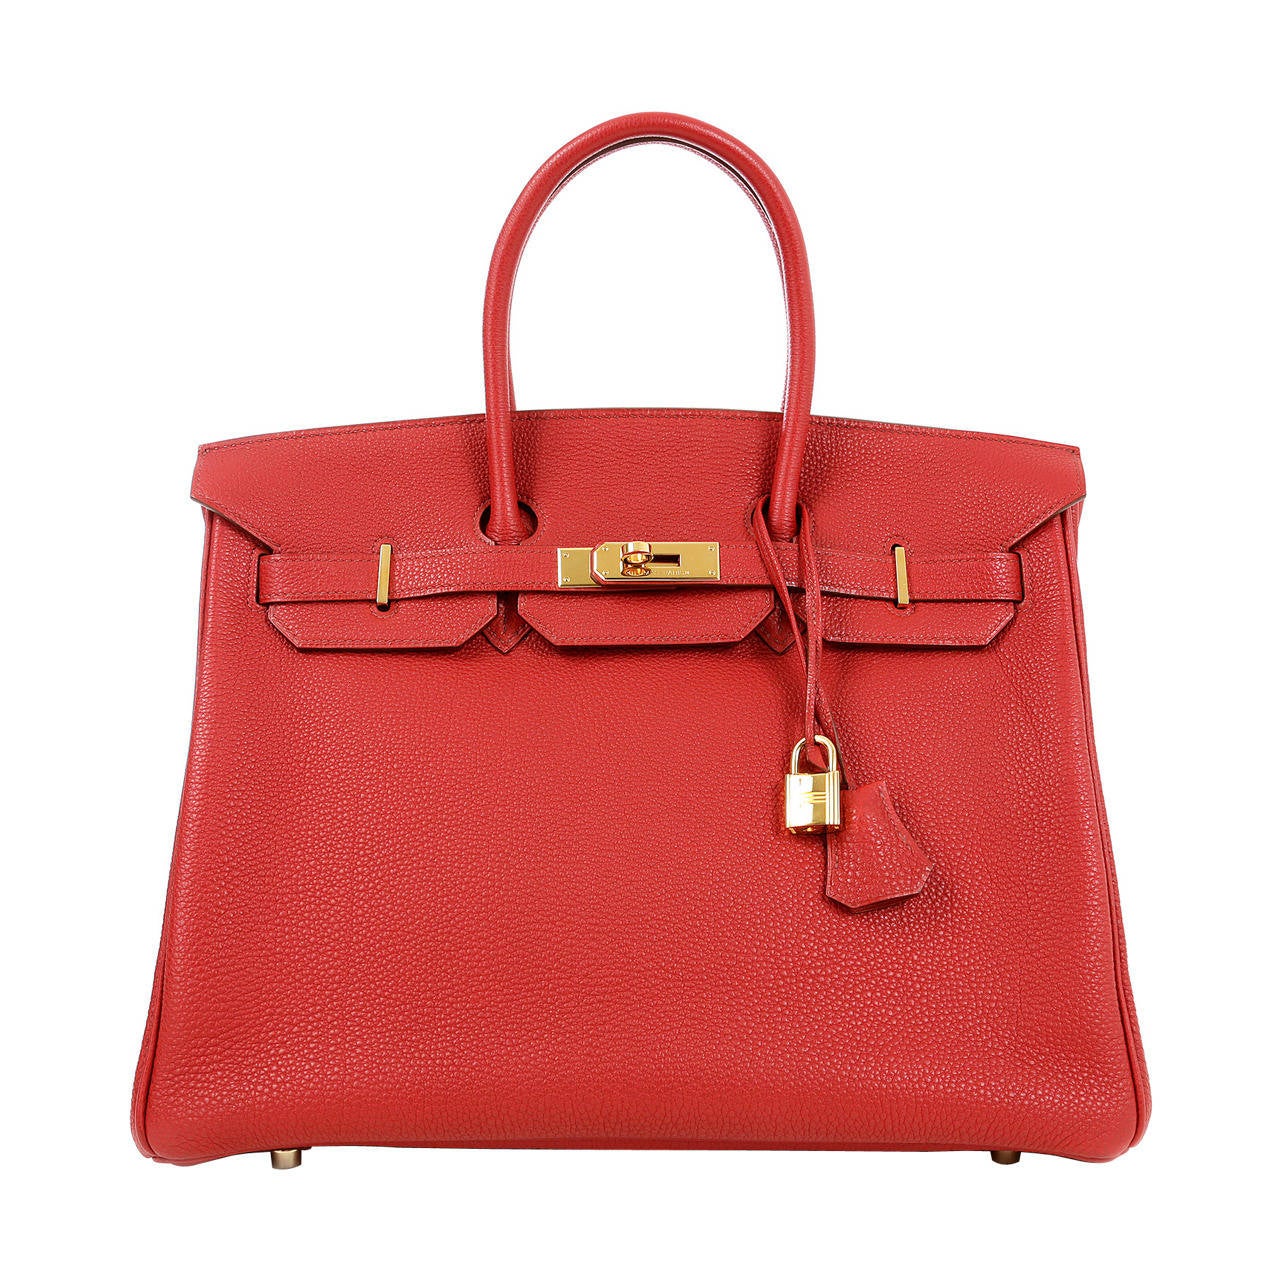 Hermes Red Leather 35 cm Birkin Bag-  RED TOGO with GOLD hardware